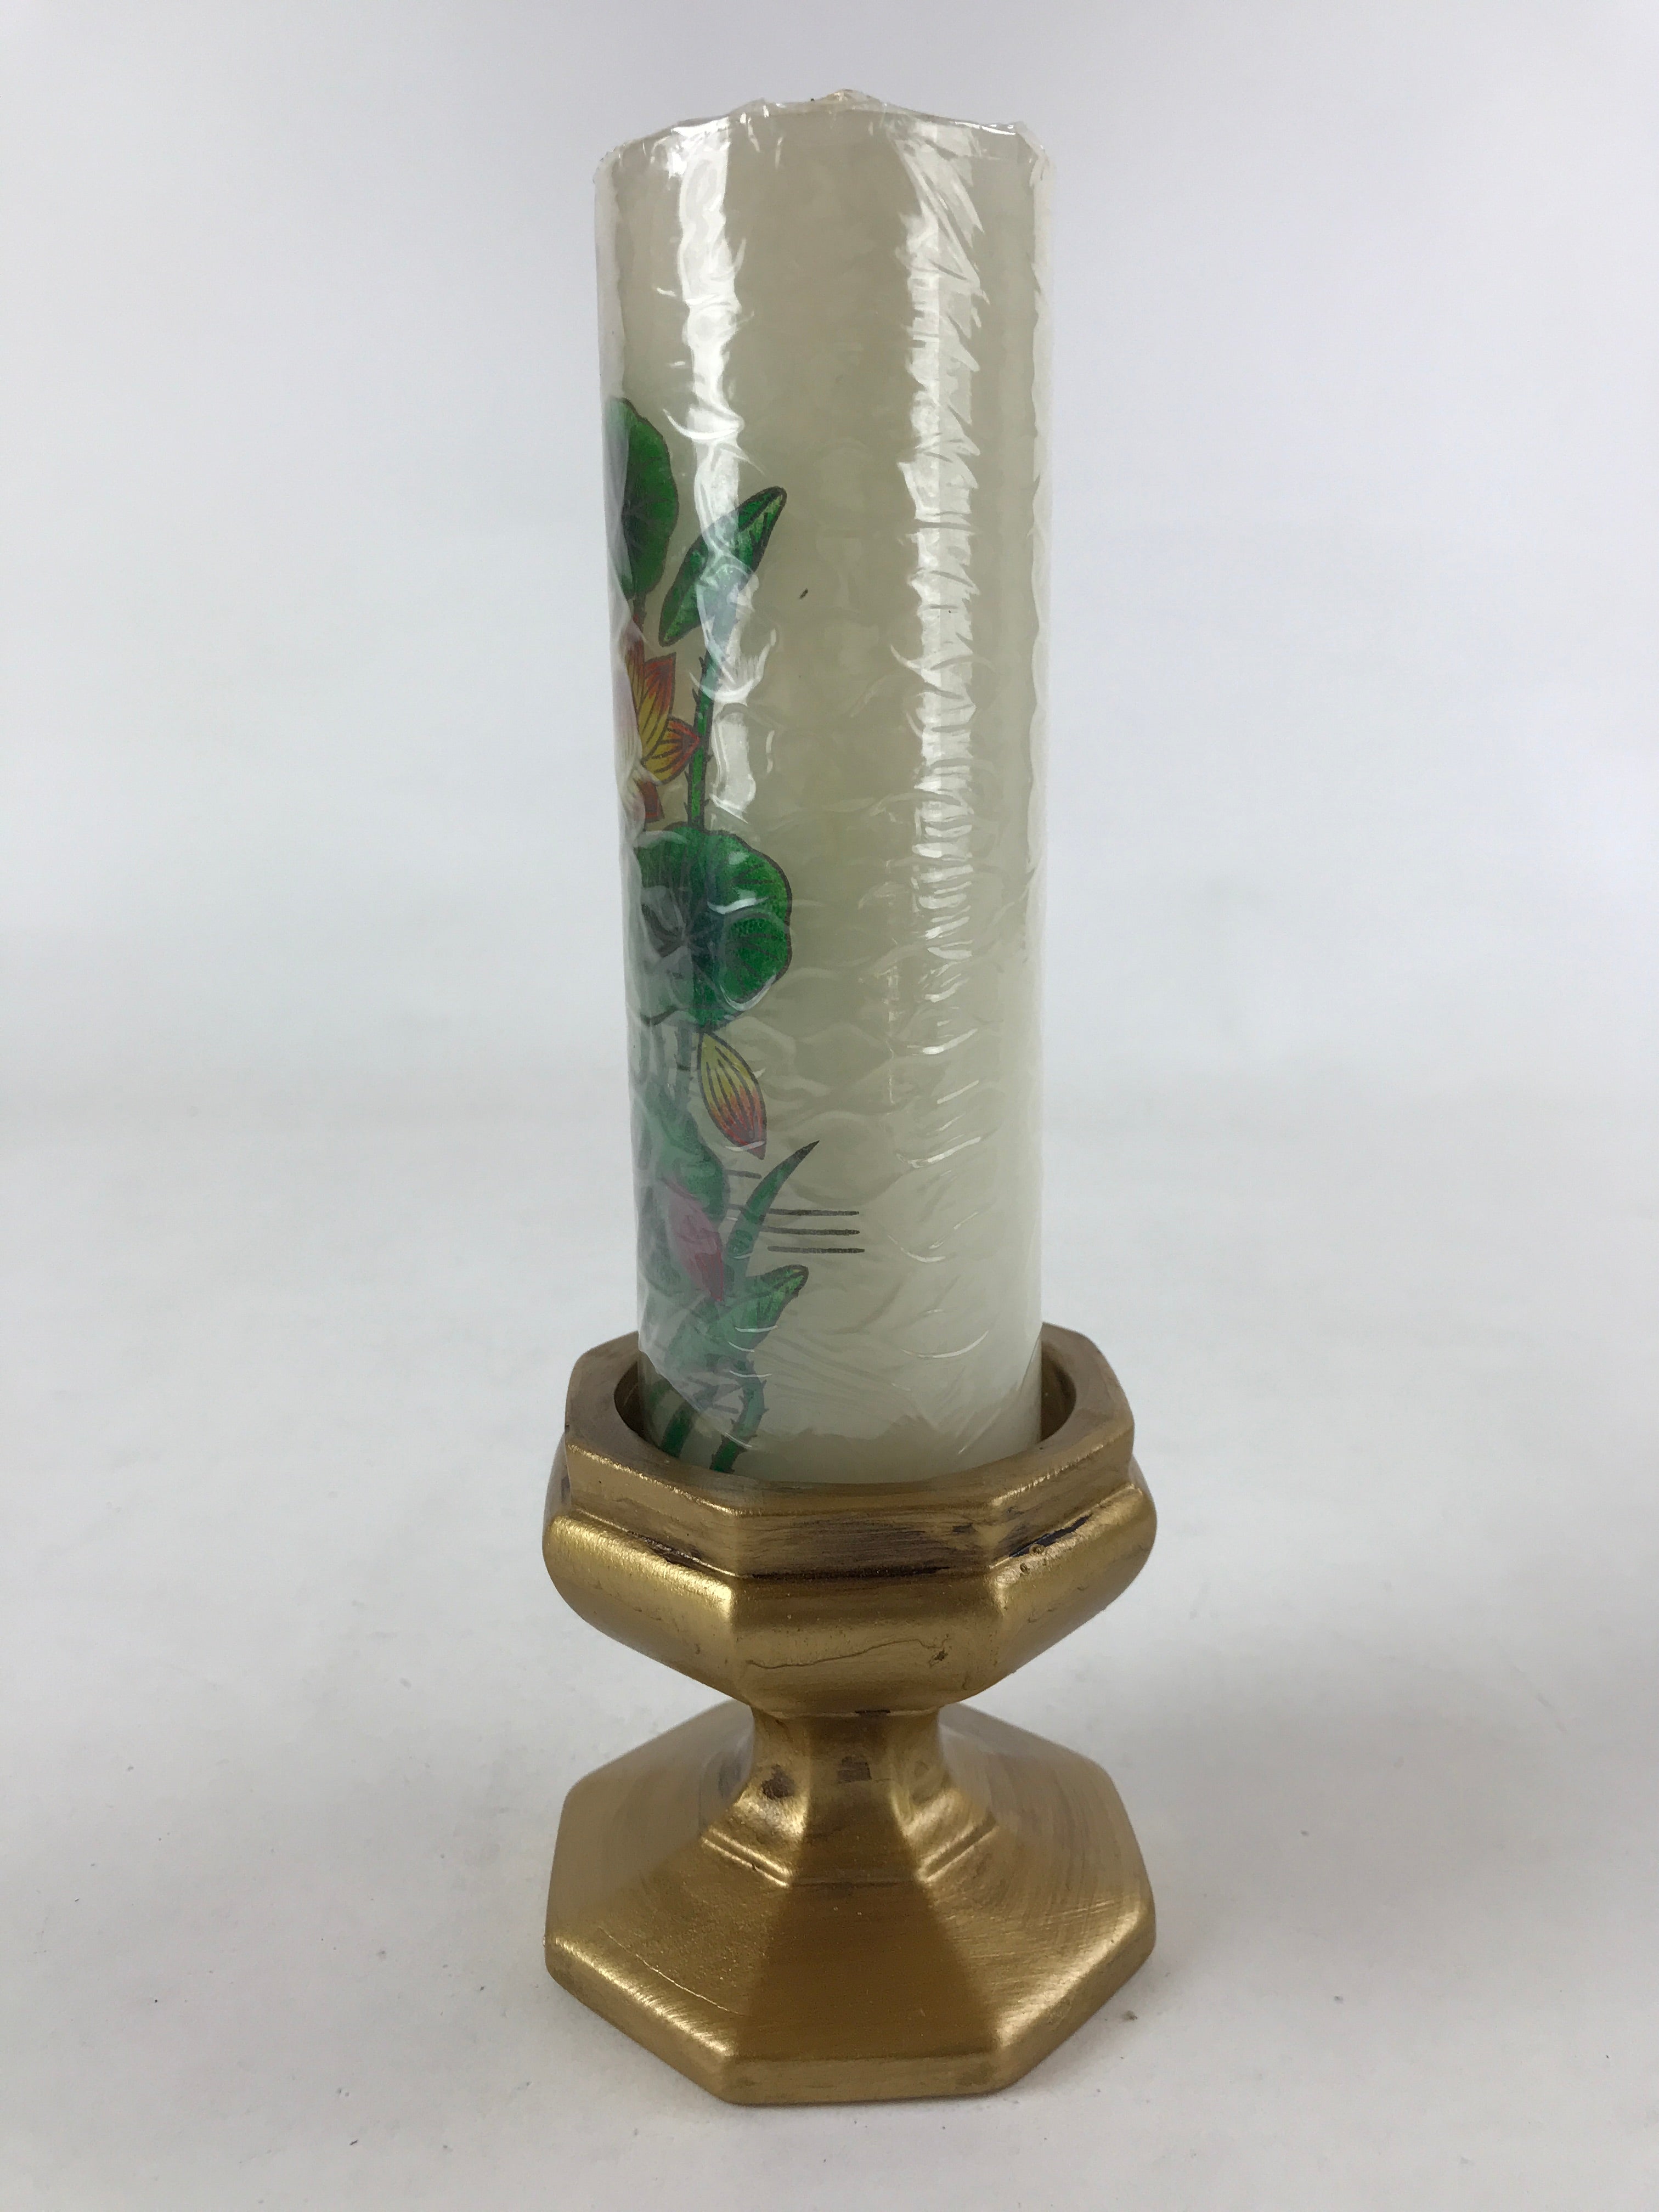 Japanese Buddhist Ceramic Candle Holder W/ Lotus Candle Vtg Gold Flower BA134